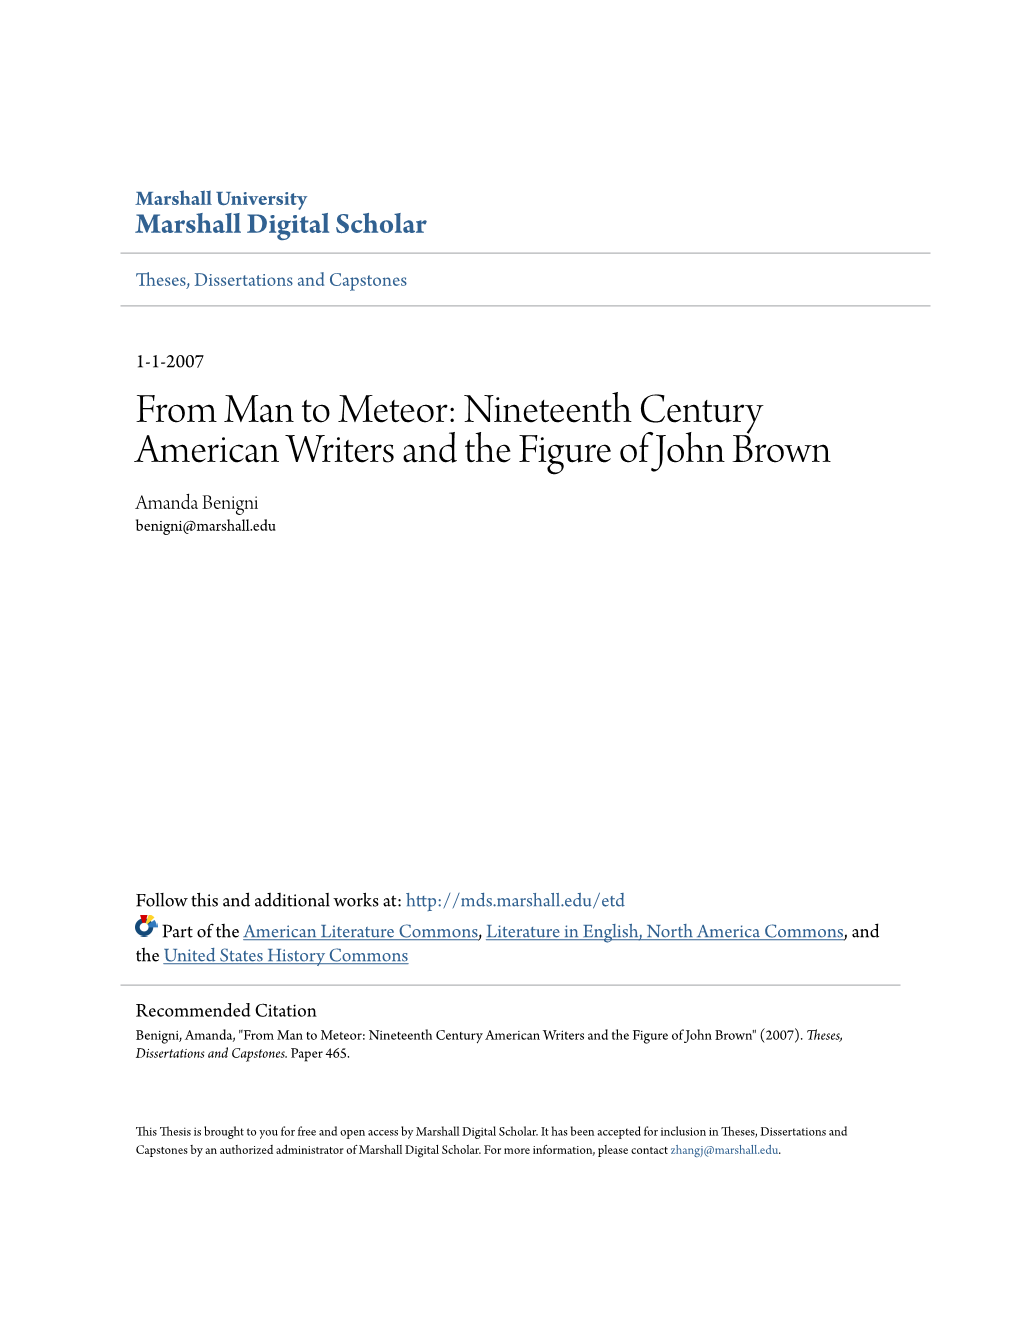 From Man to Meteor: Nineteenth Century American Writers and the Figure of John Brown Amanda Benigni Benigni@Marshall.Edu